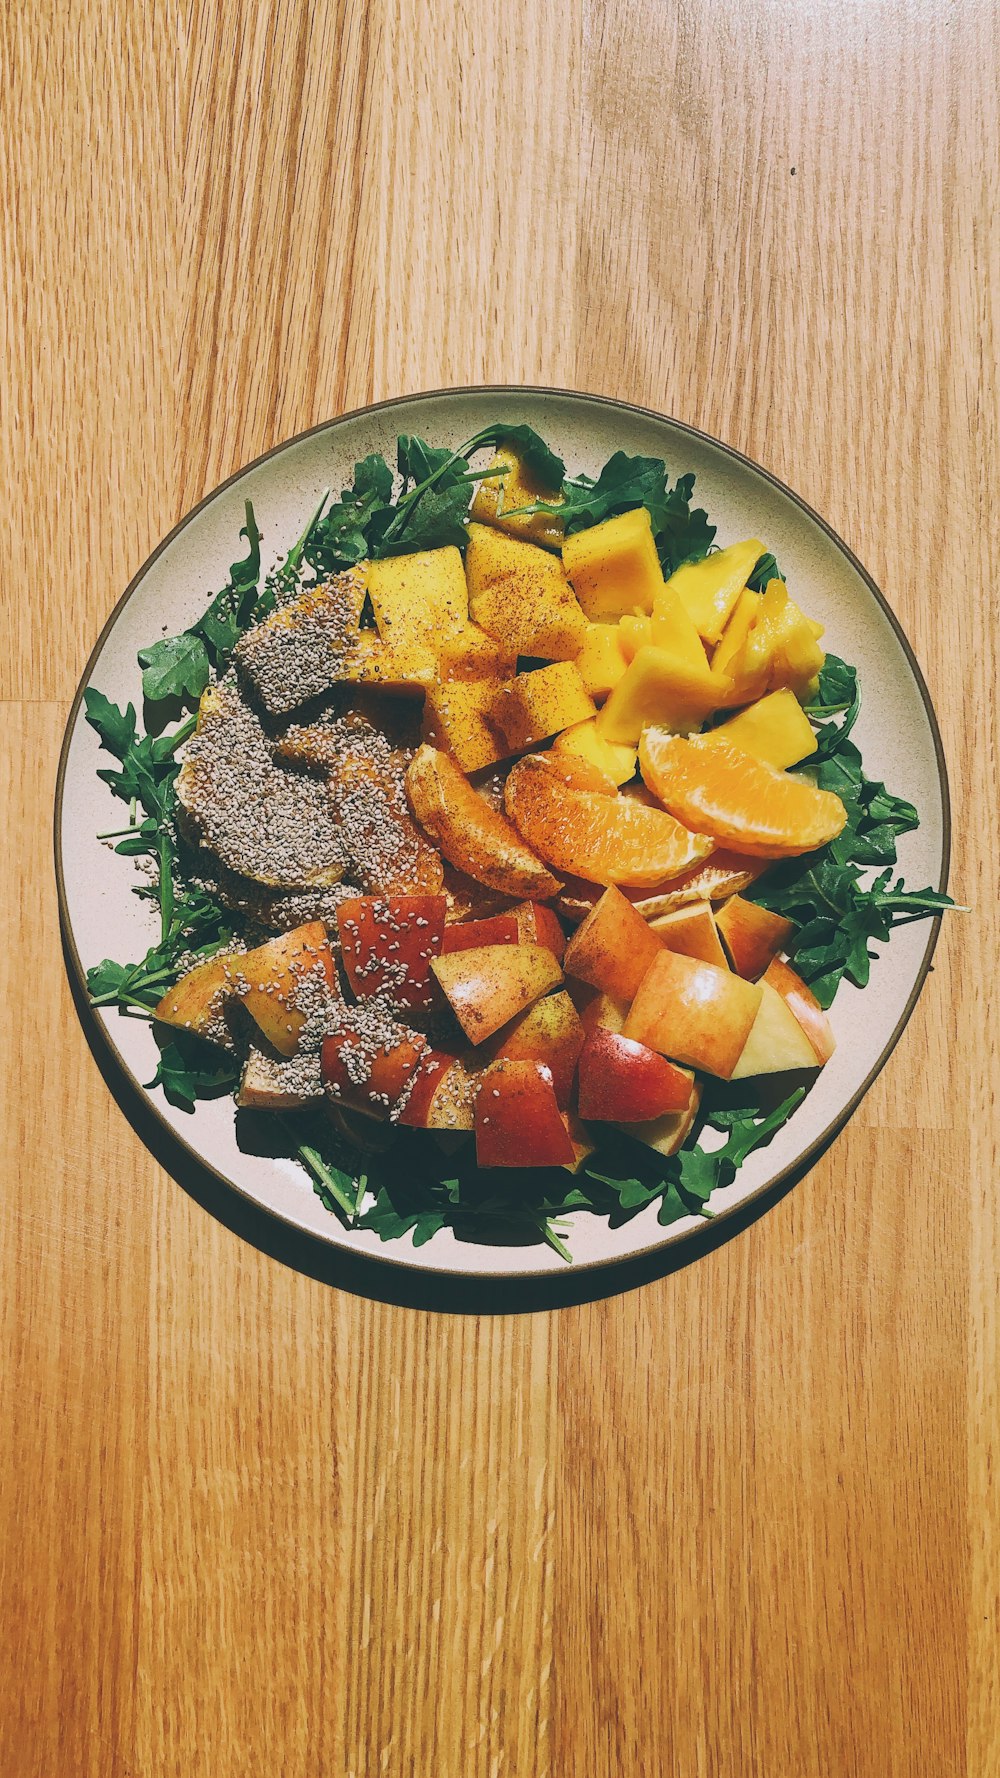 assorted fruit salad on plate